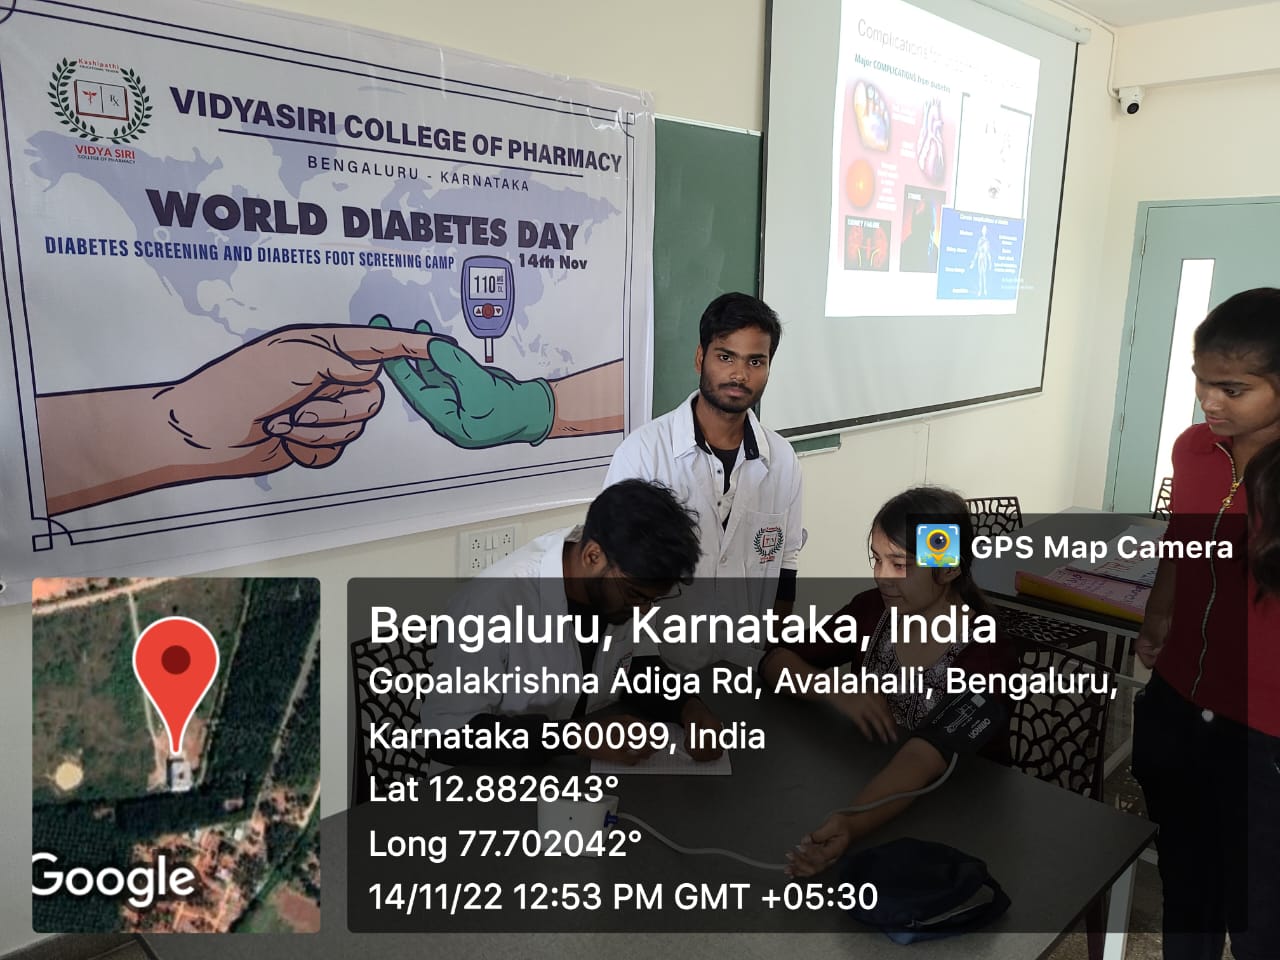 Vidya Siri College of Pharmacy Celebrates World Diabetes Day with Community Service